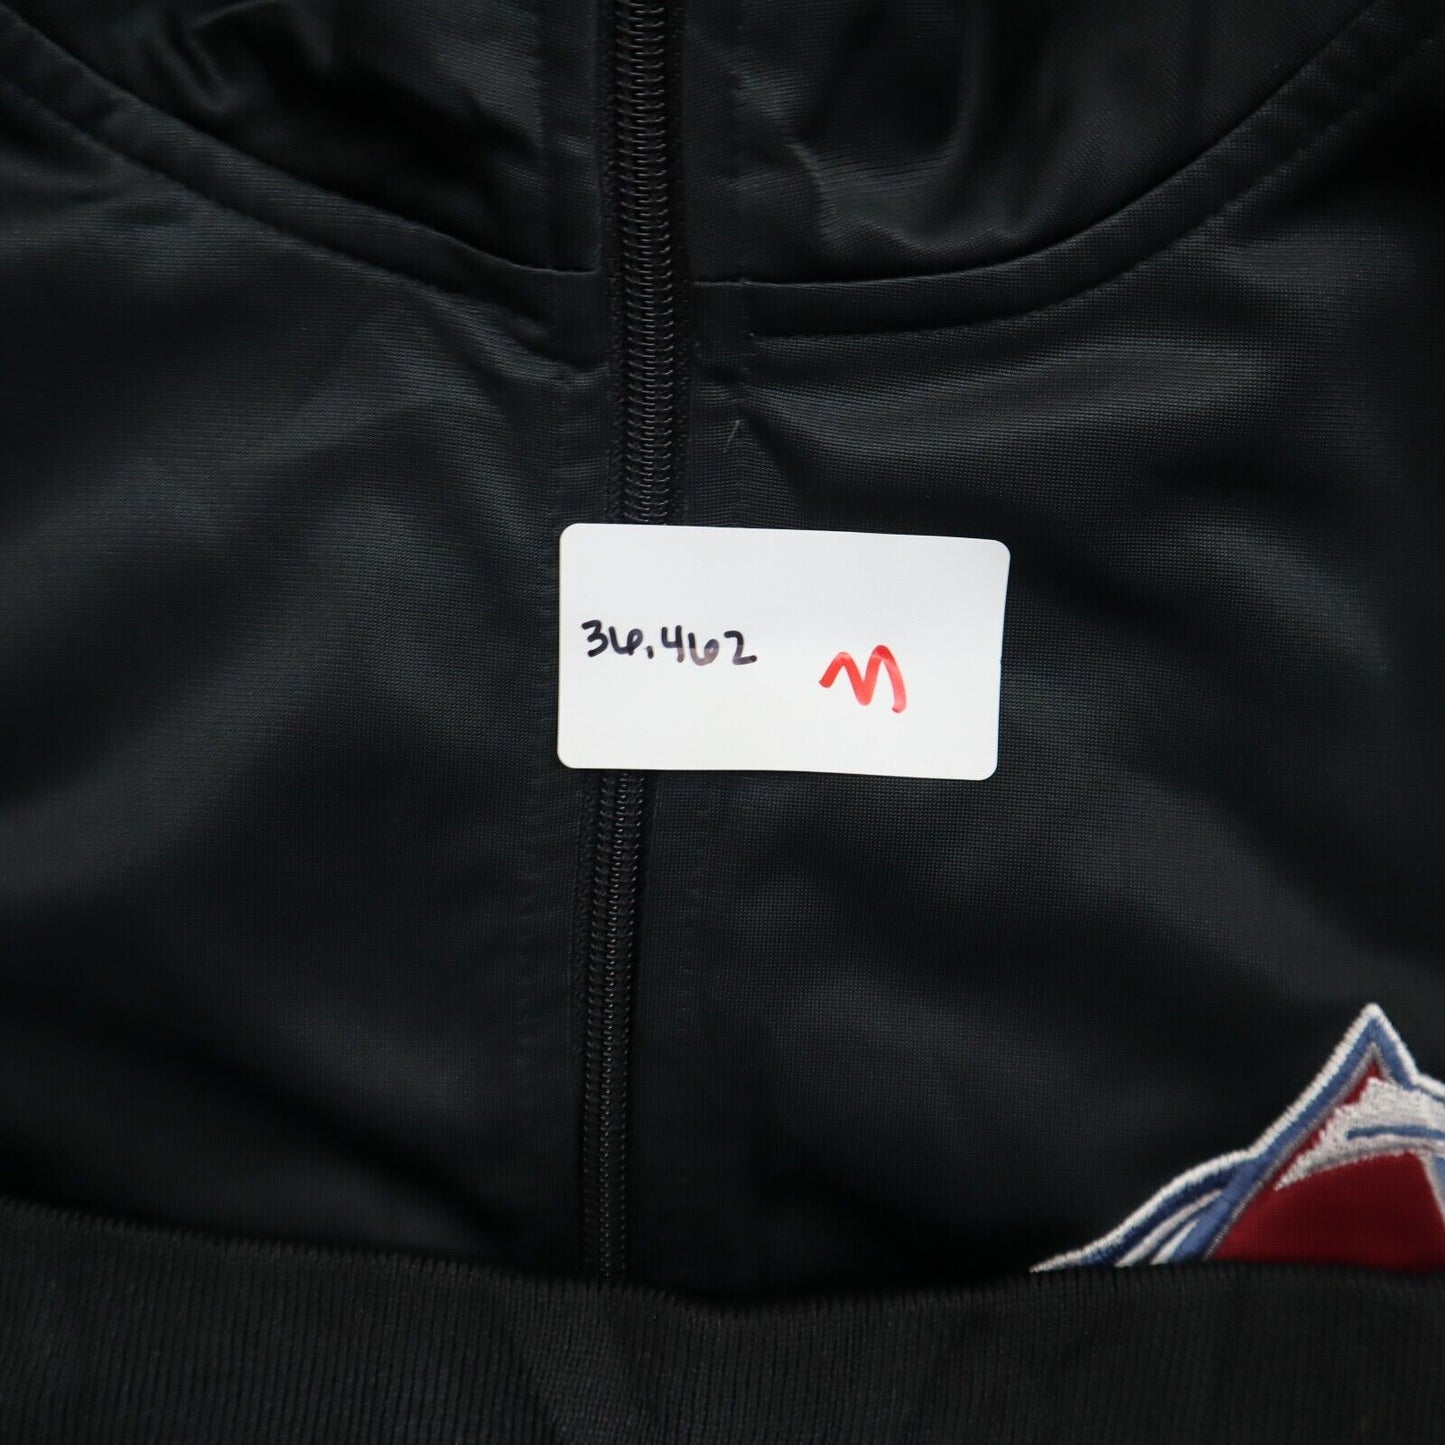 Majestic Mens Activewear Jacket Full Zip Mock Neck Long Sleeve Black Red White L